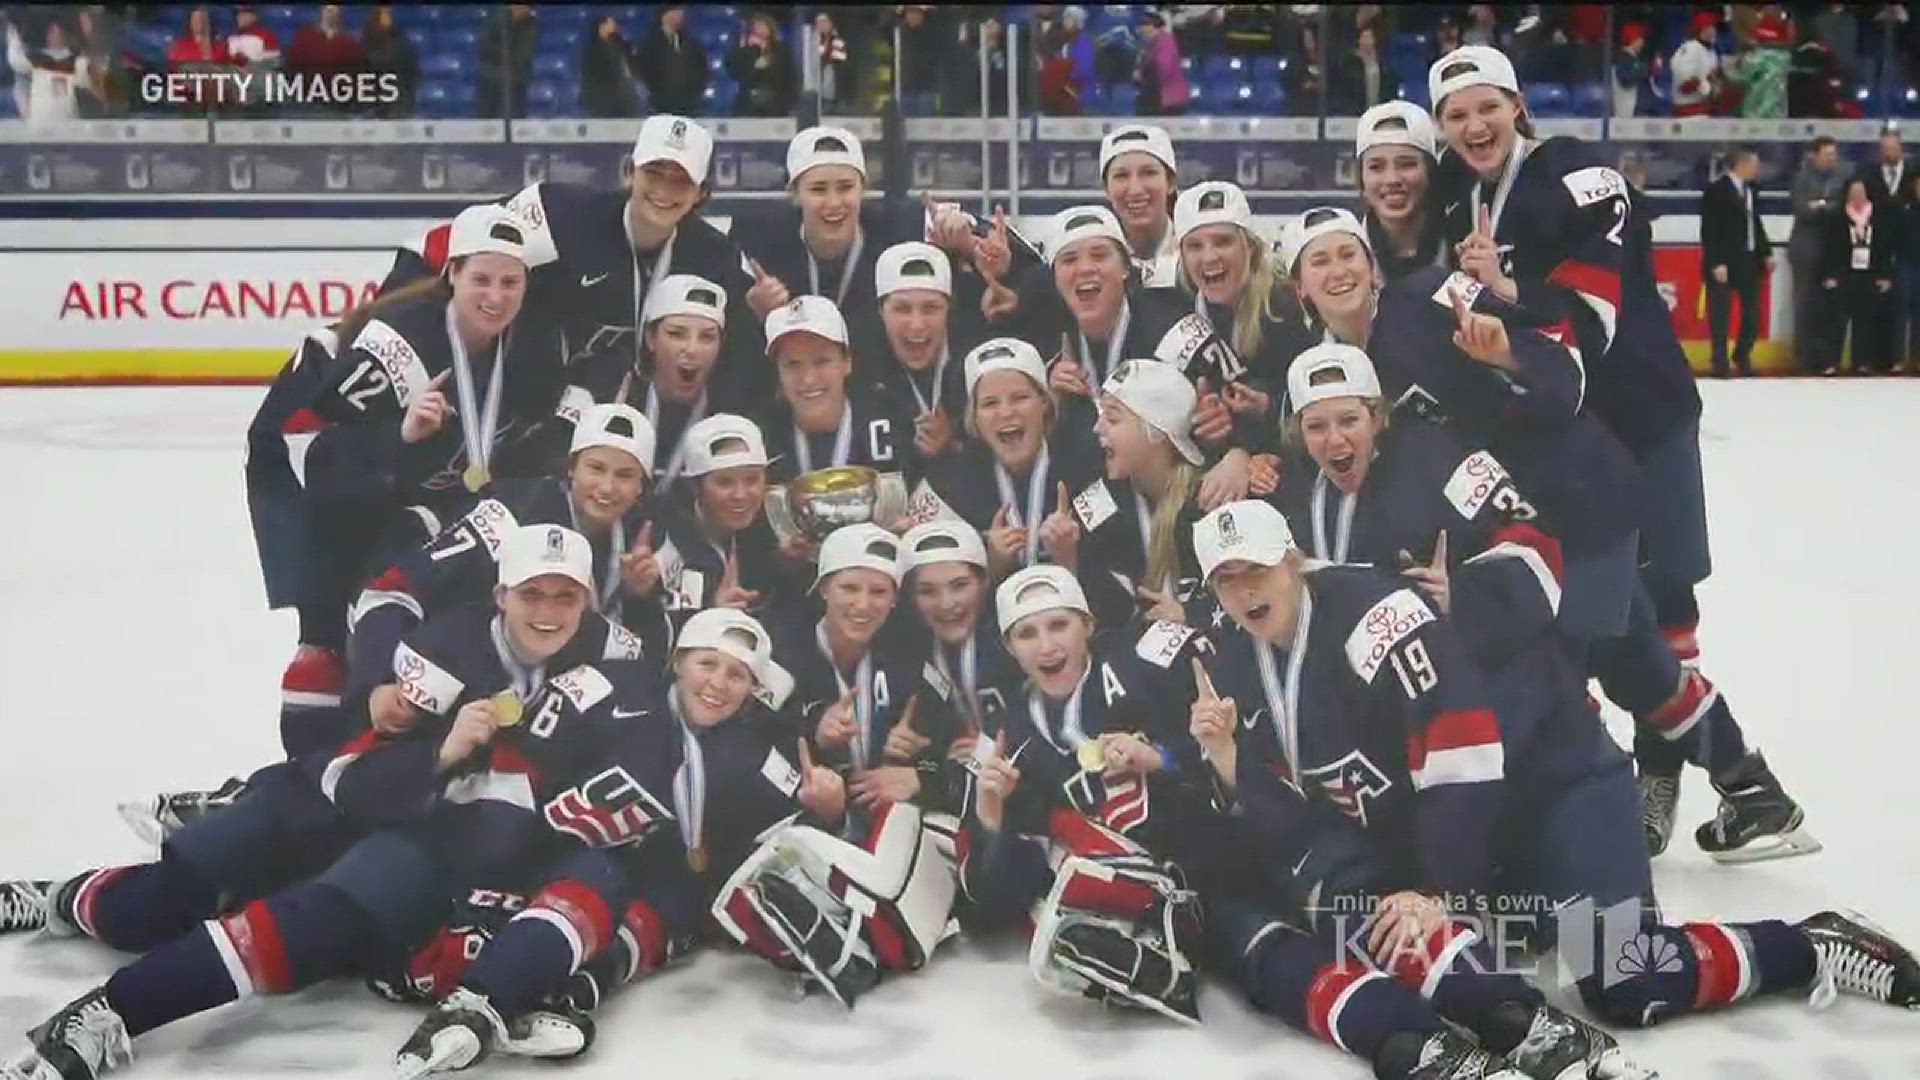 From boycott to gold: USA Women's hockey team